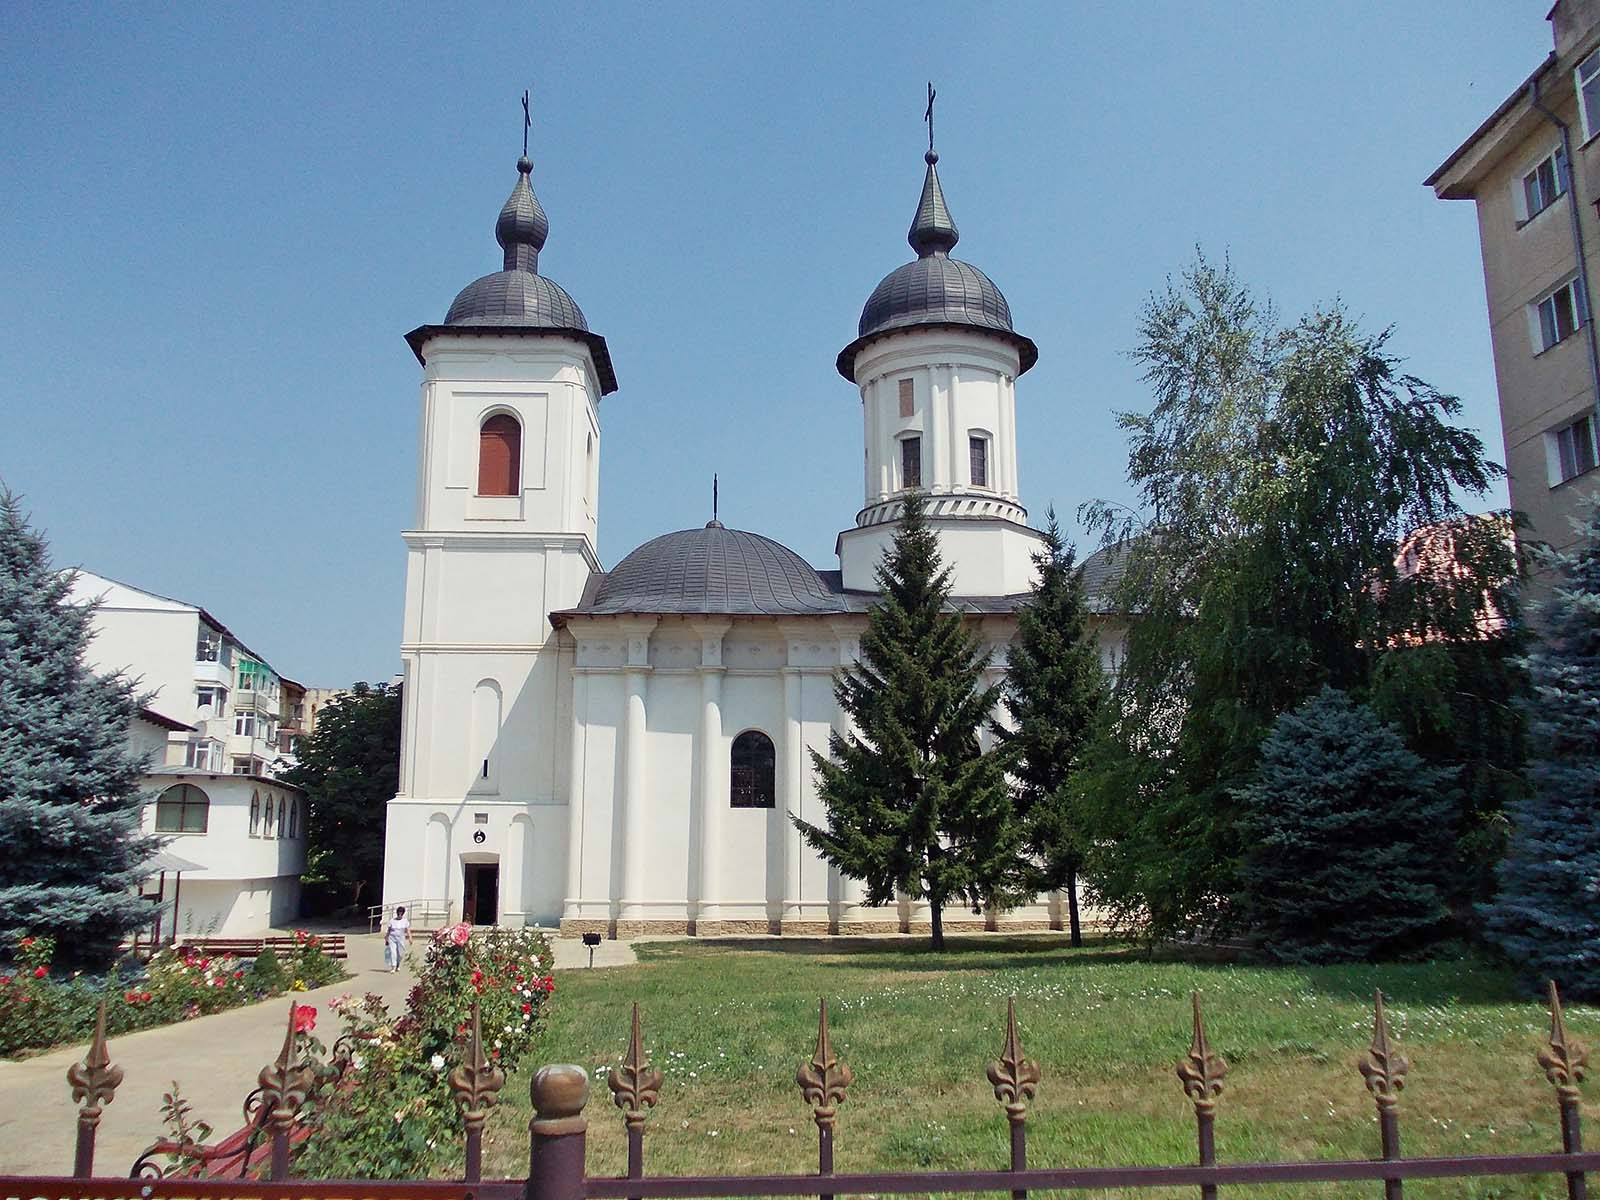 The Church of Saint Elias